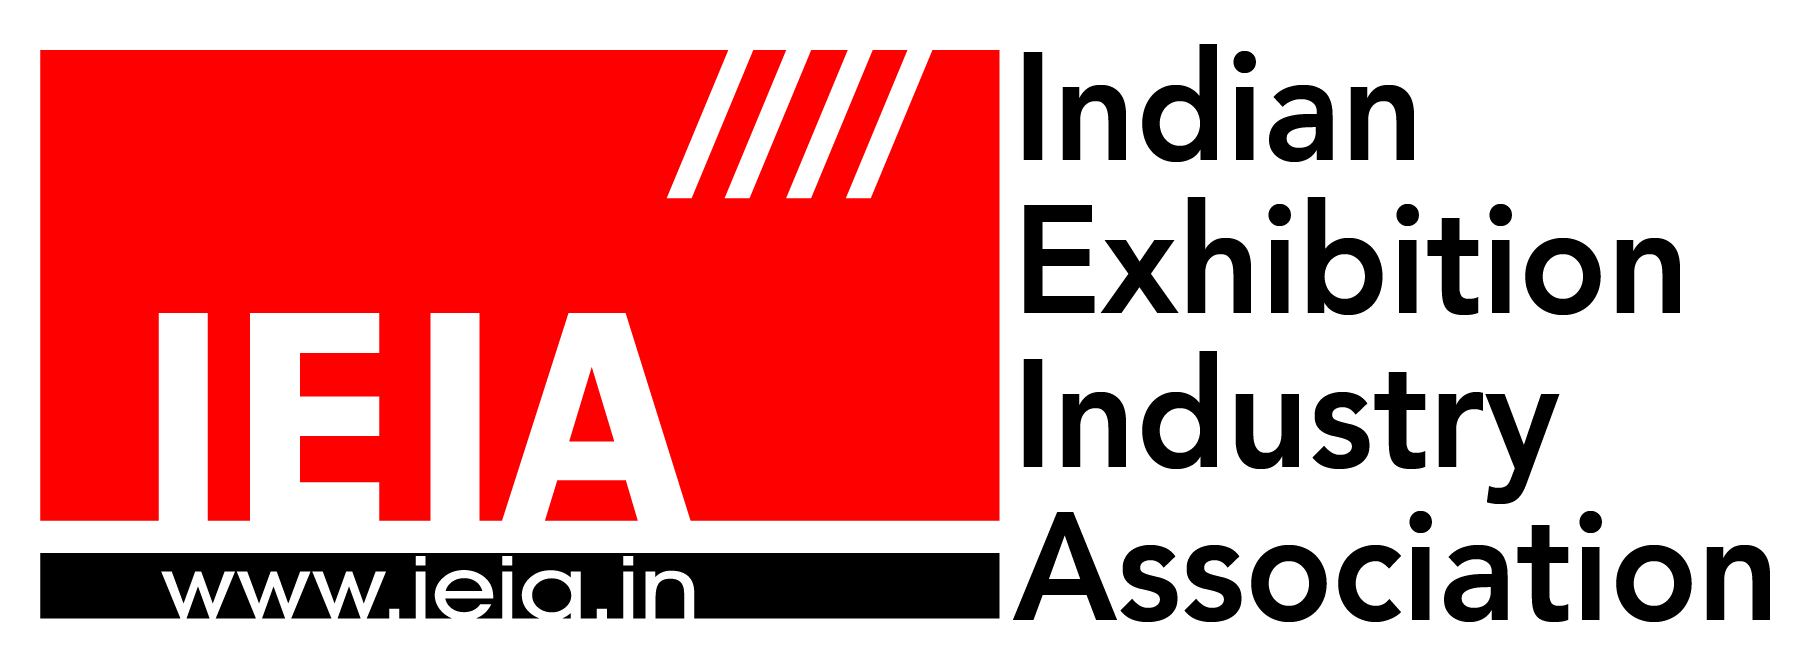 Indian Exhibition Industry Association (IEIA) Logo